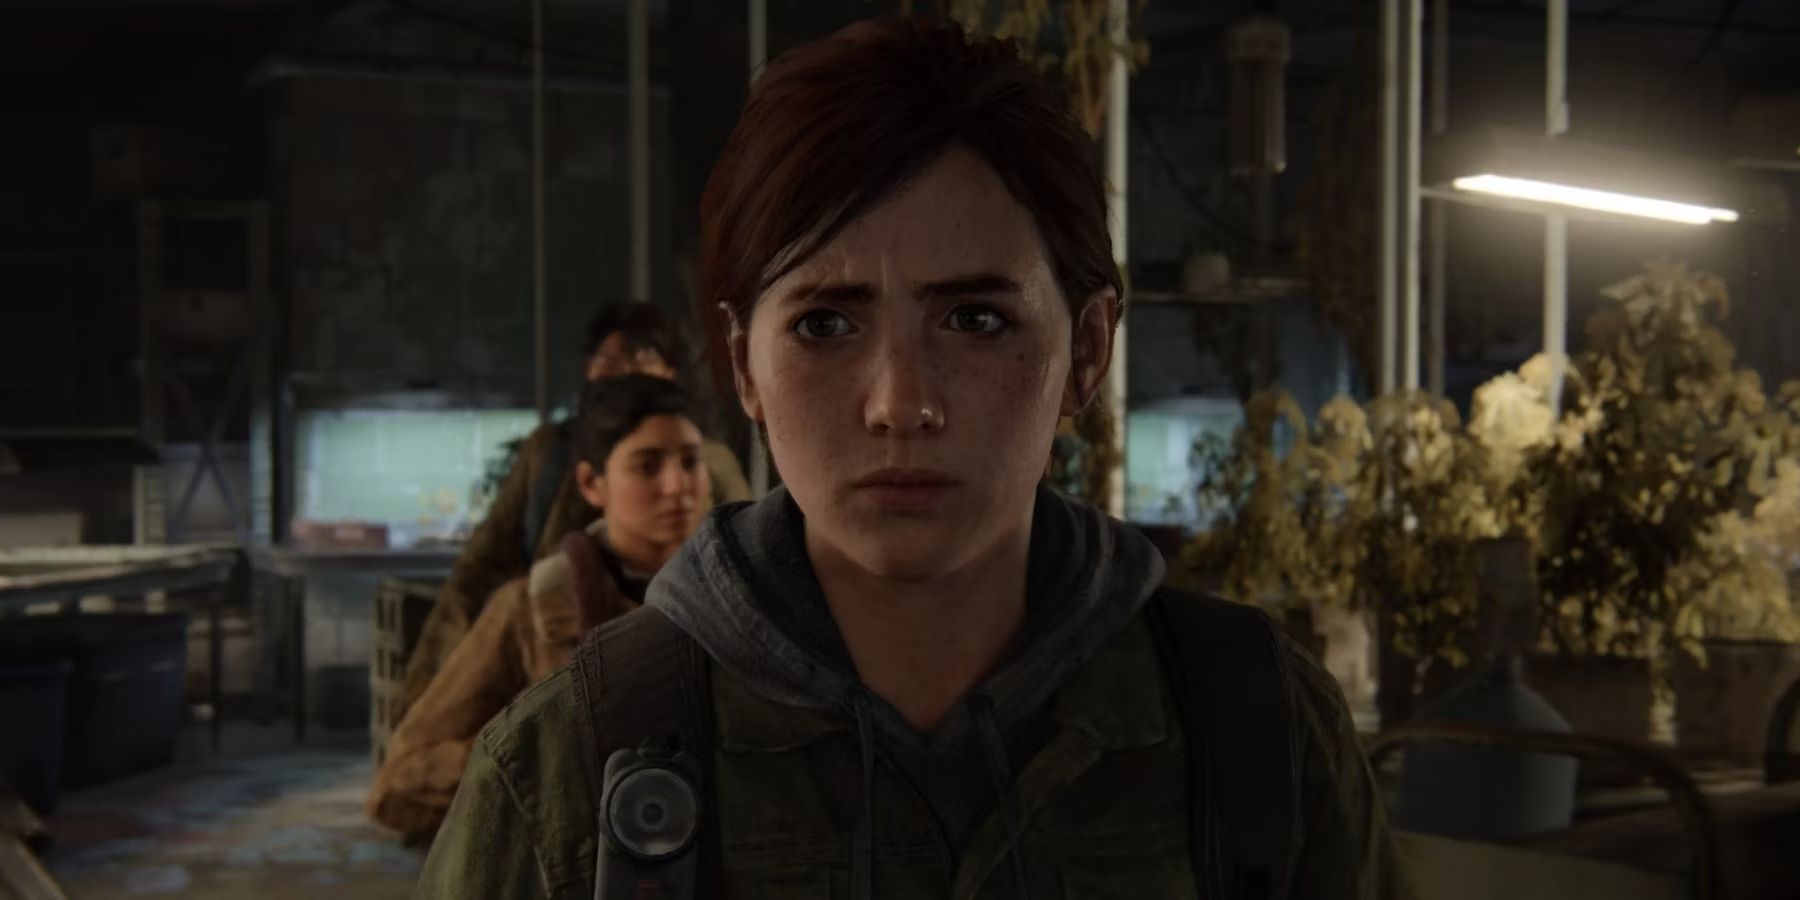 Strange The Last of Us 2 Bug Makes Ellie Fly, Ruins
Permadeath Run